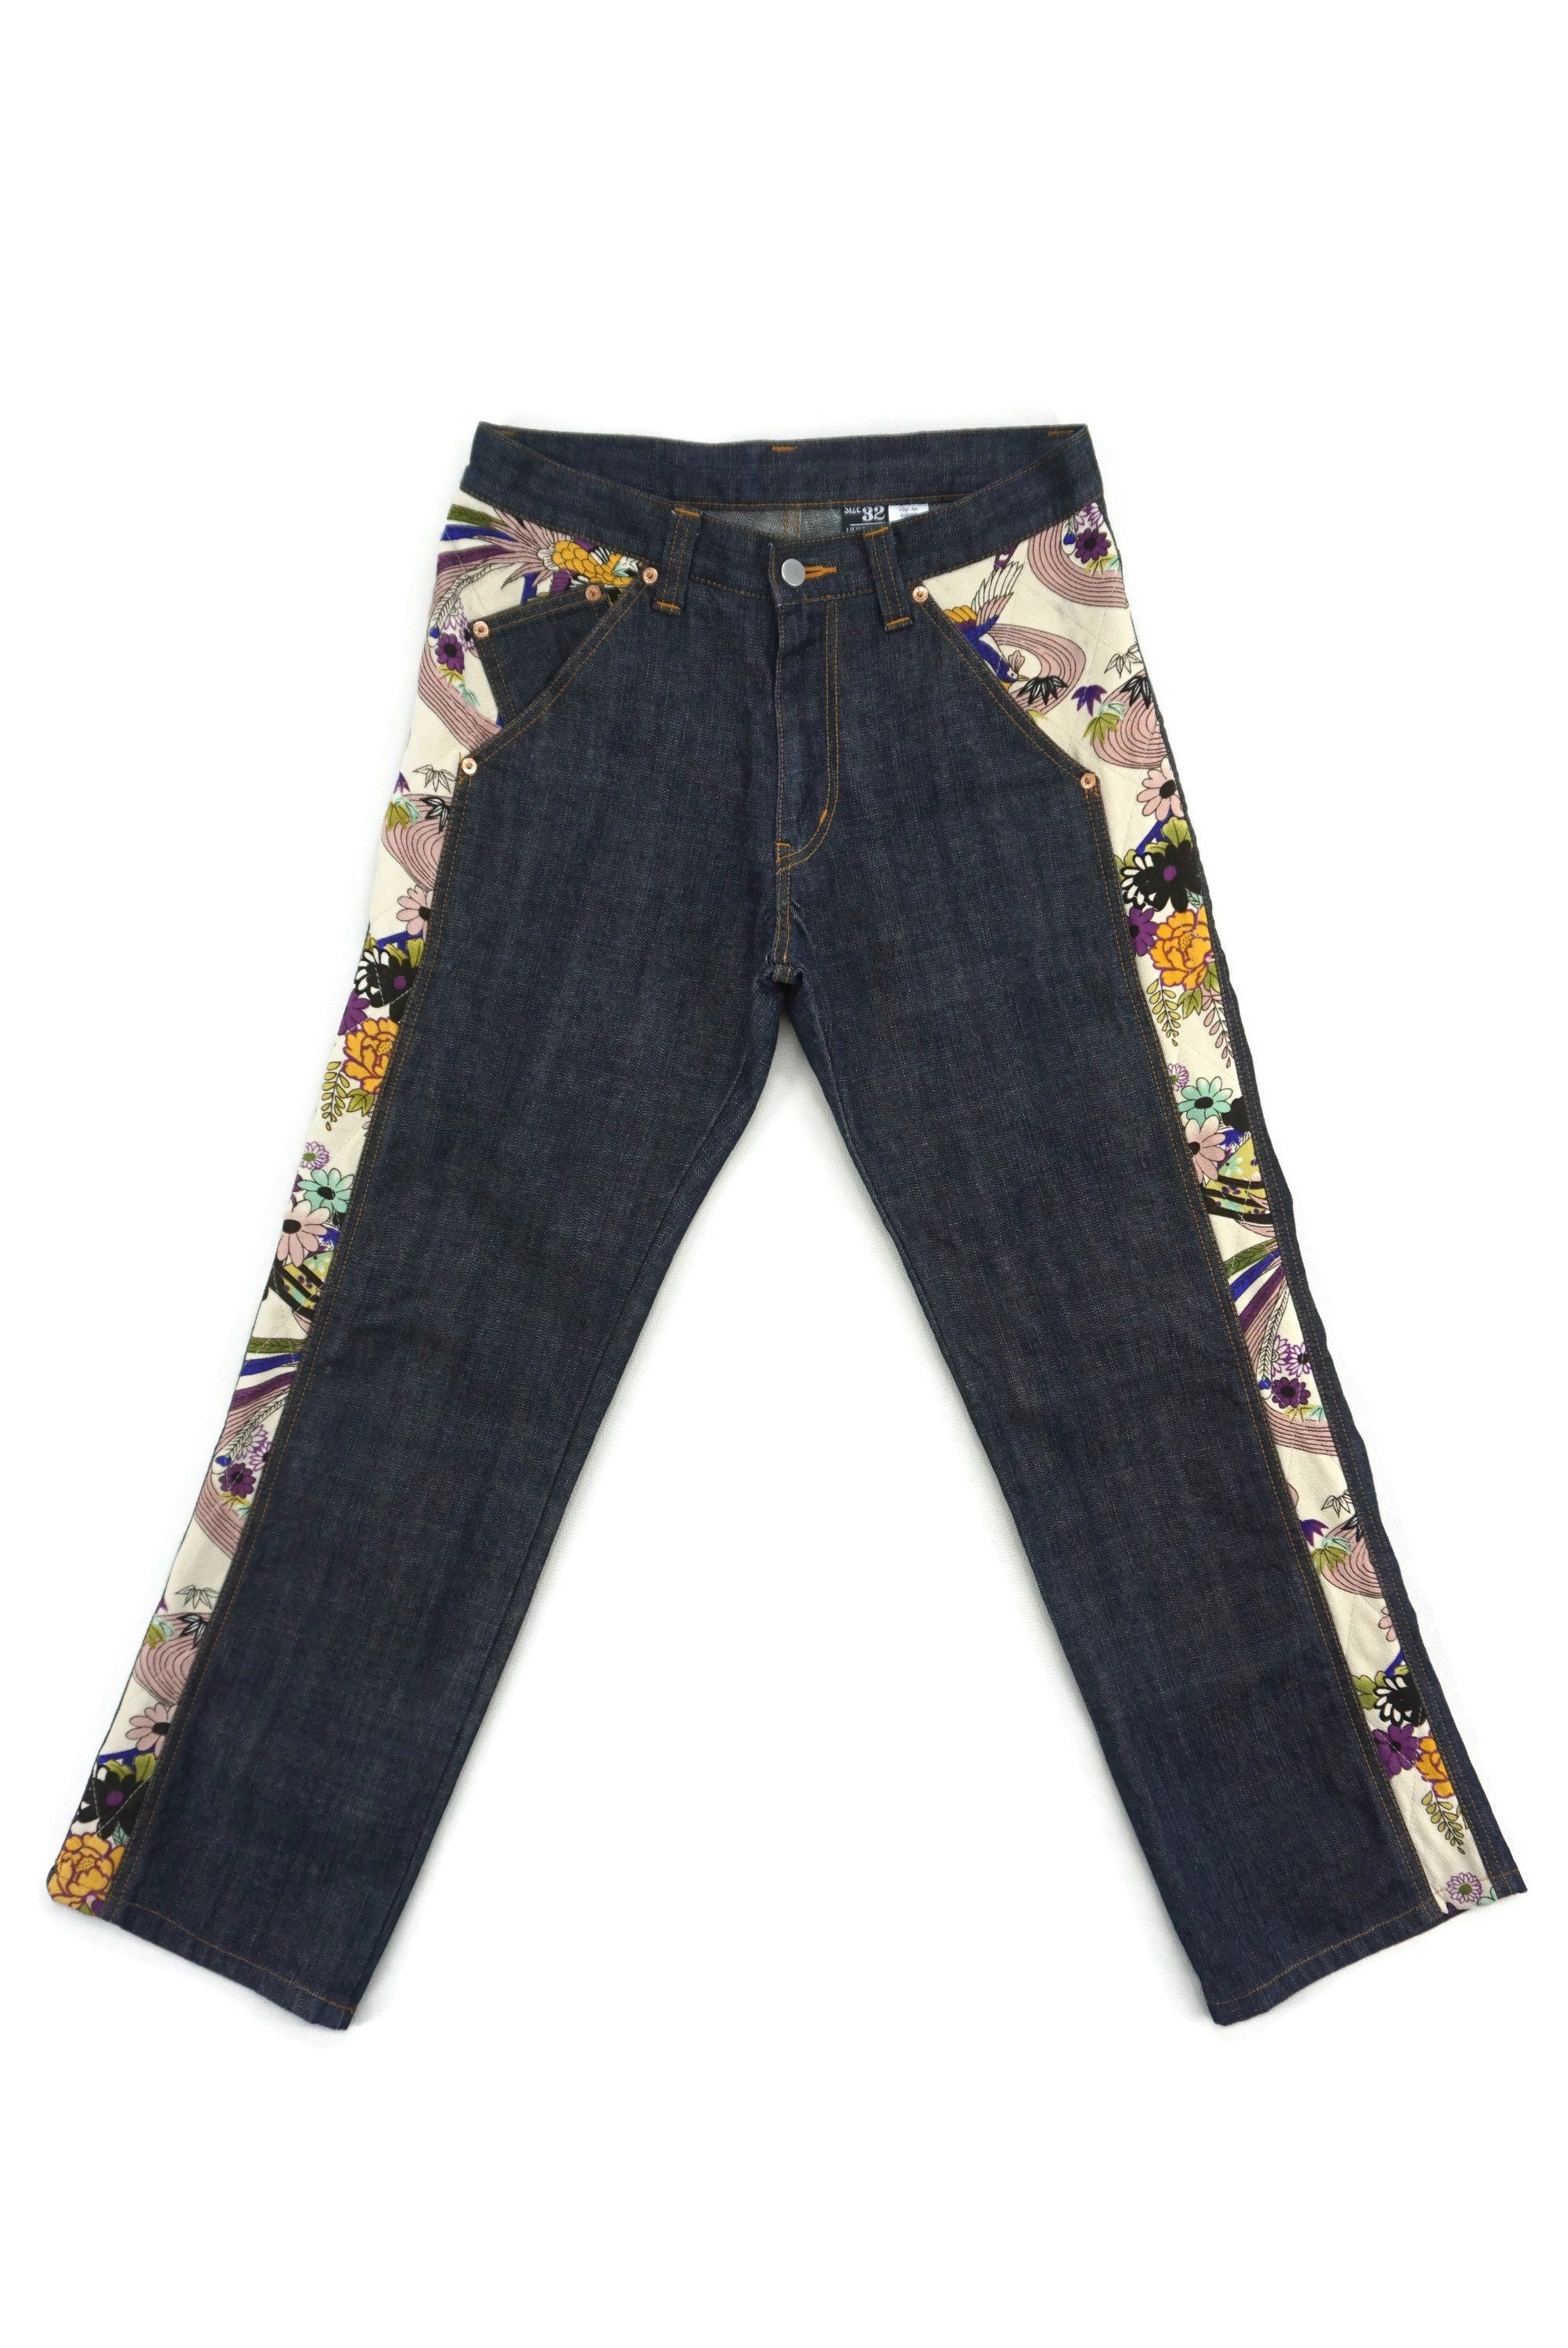 Karakuri Tamashii Japans Borduurwerk Sukajan Jeans Kleding Gender-neutrale kleding volwassenen Jeans 